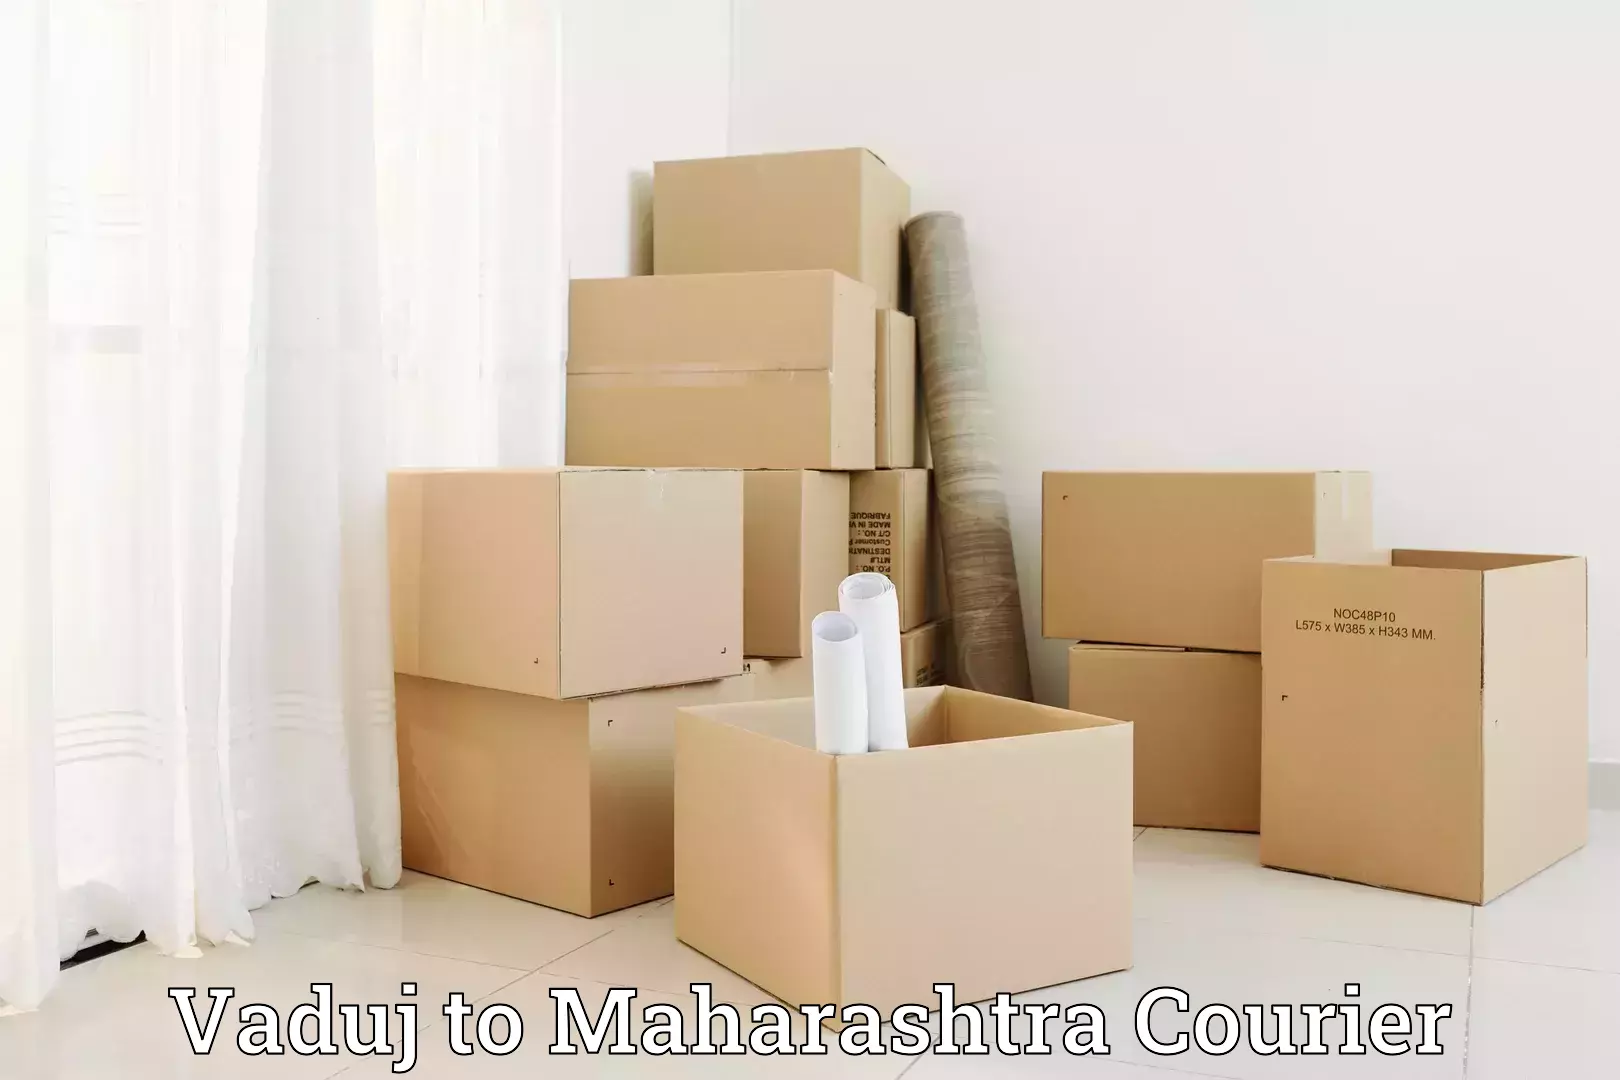 Luggage transport consultancy Vaduj to Maharashtra